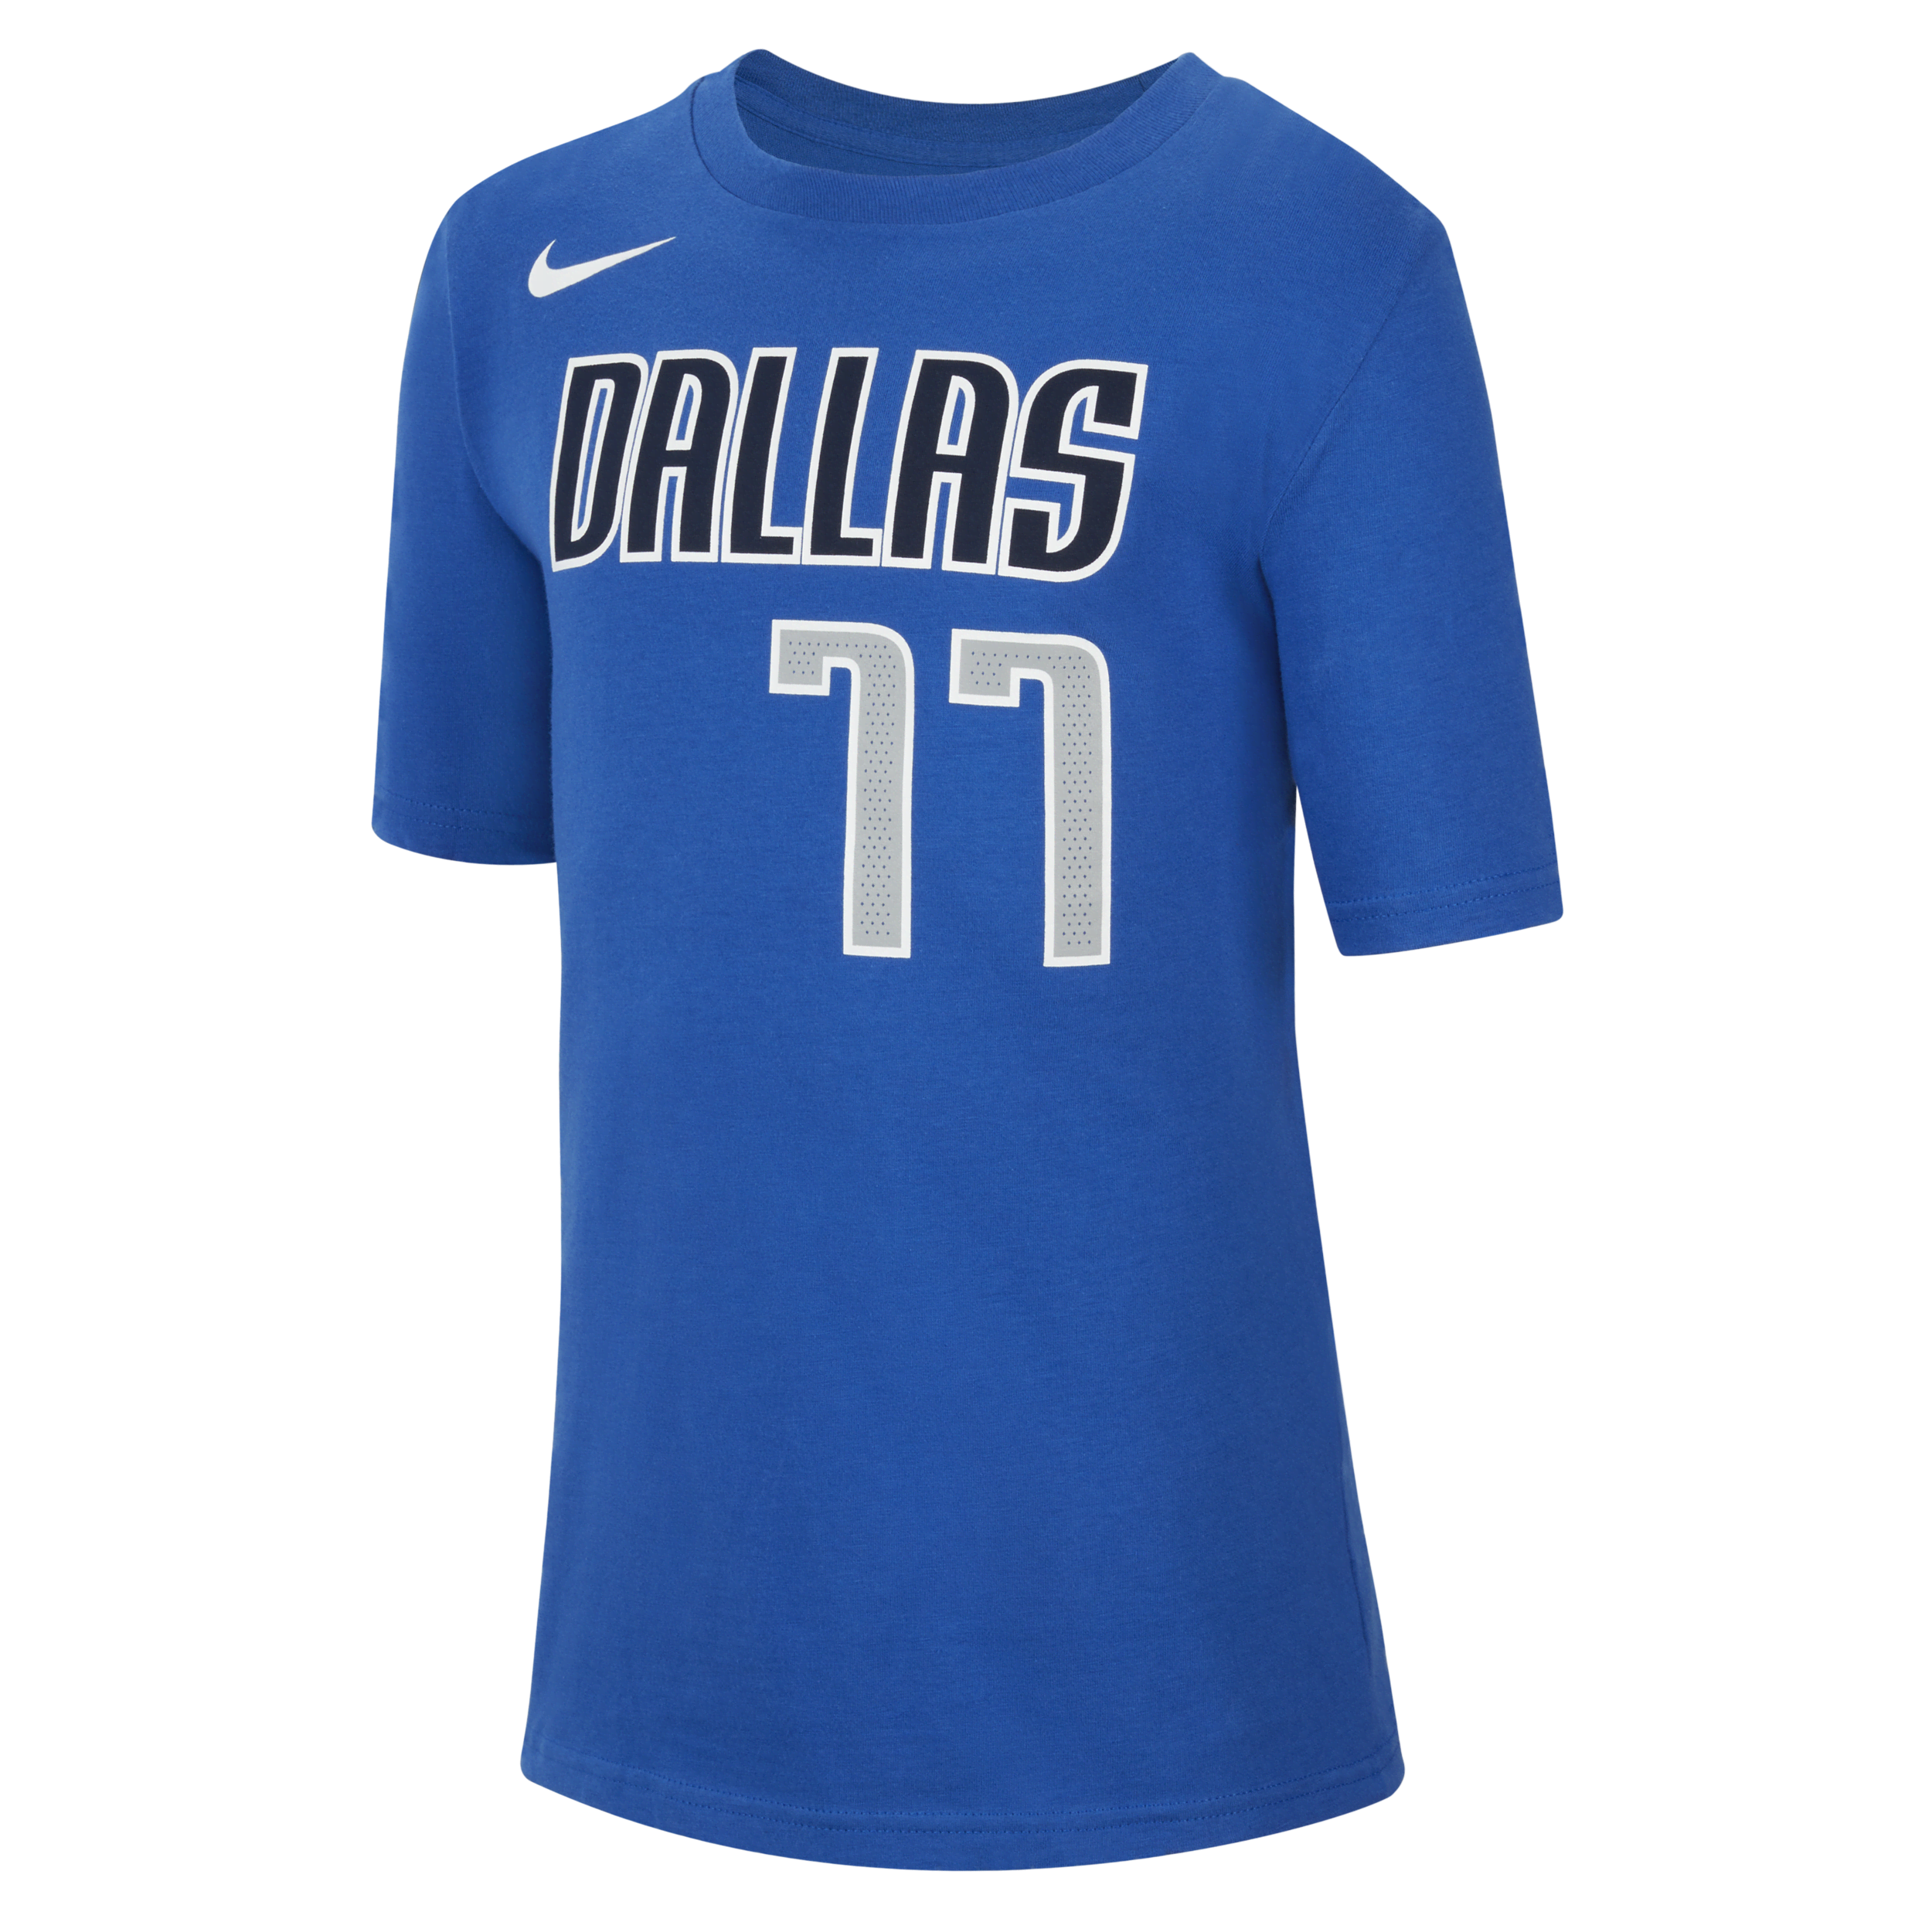 Dallas Mavericks Nike NBA-shirt voor kids - Blauw